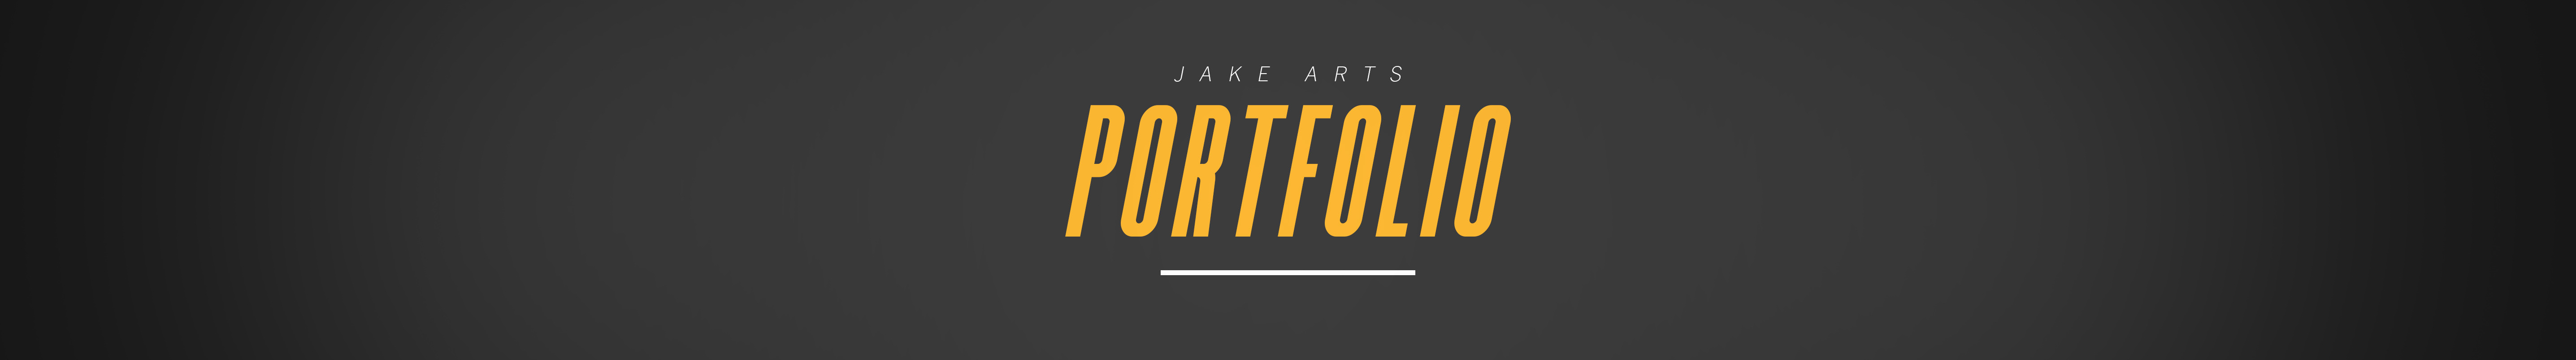 Jake Arts's profile banner